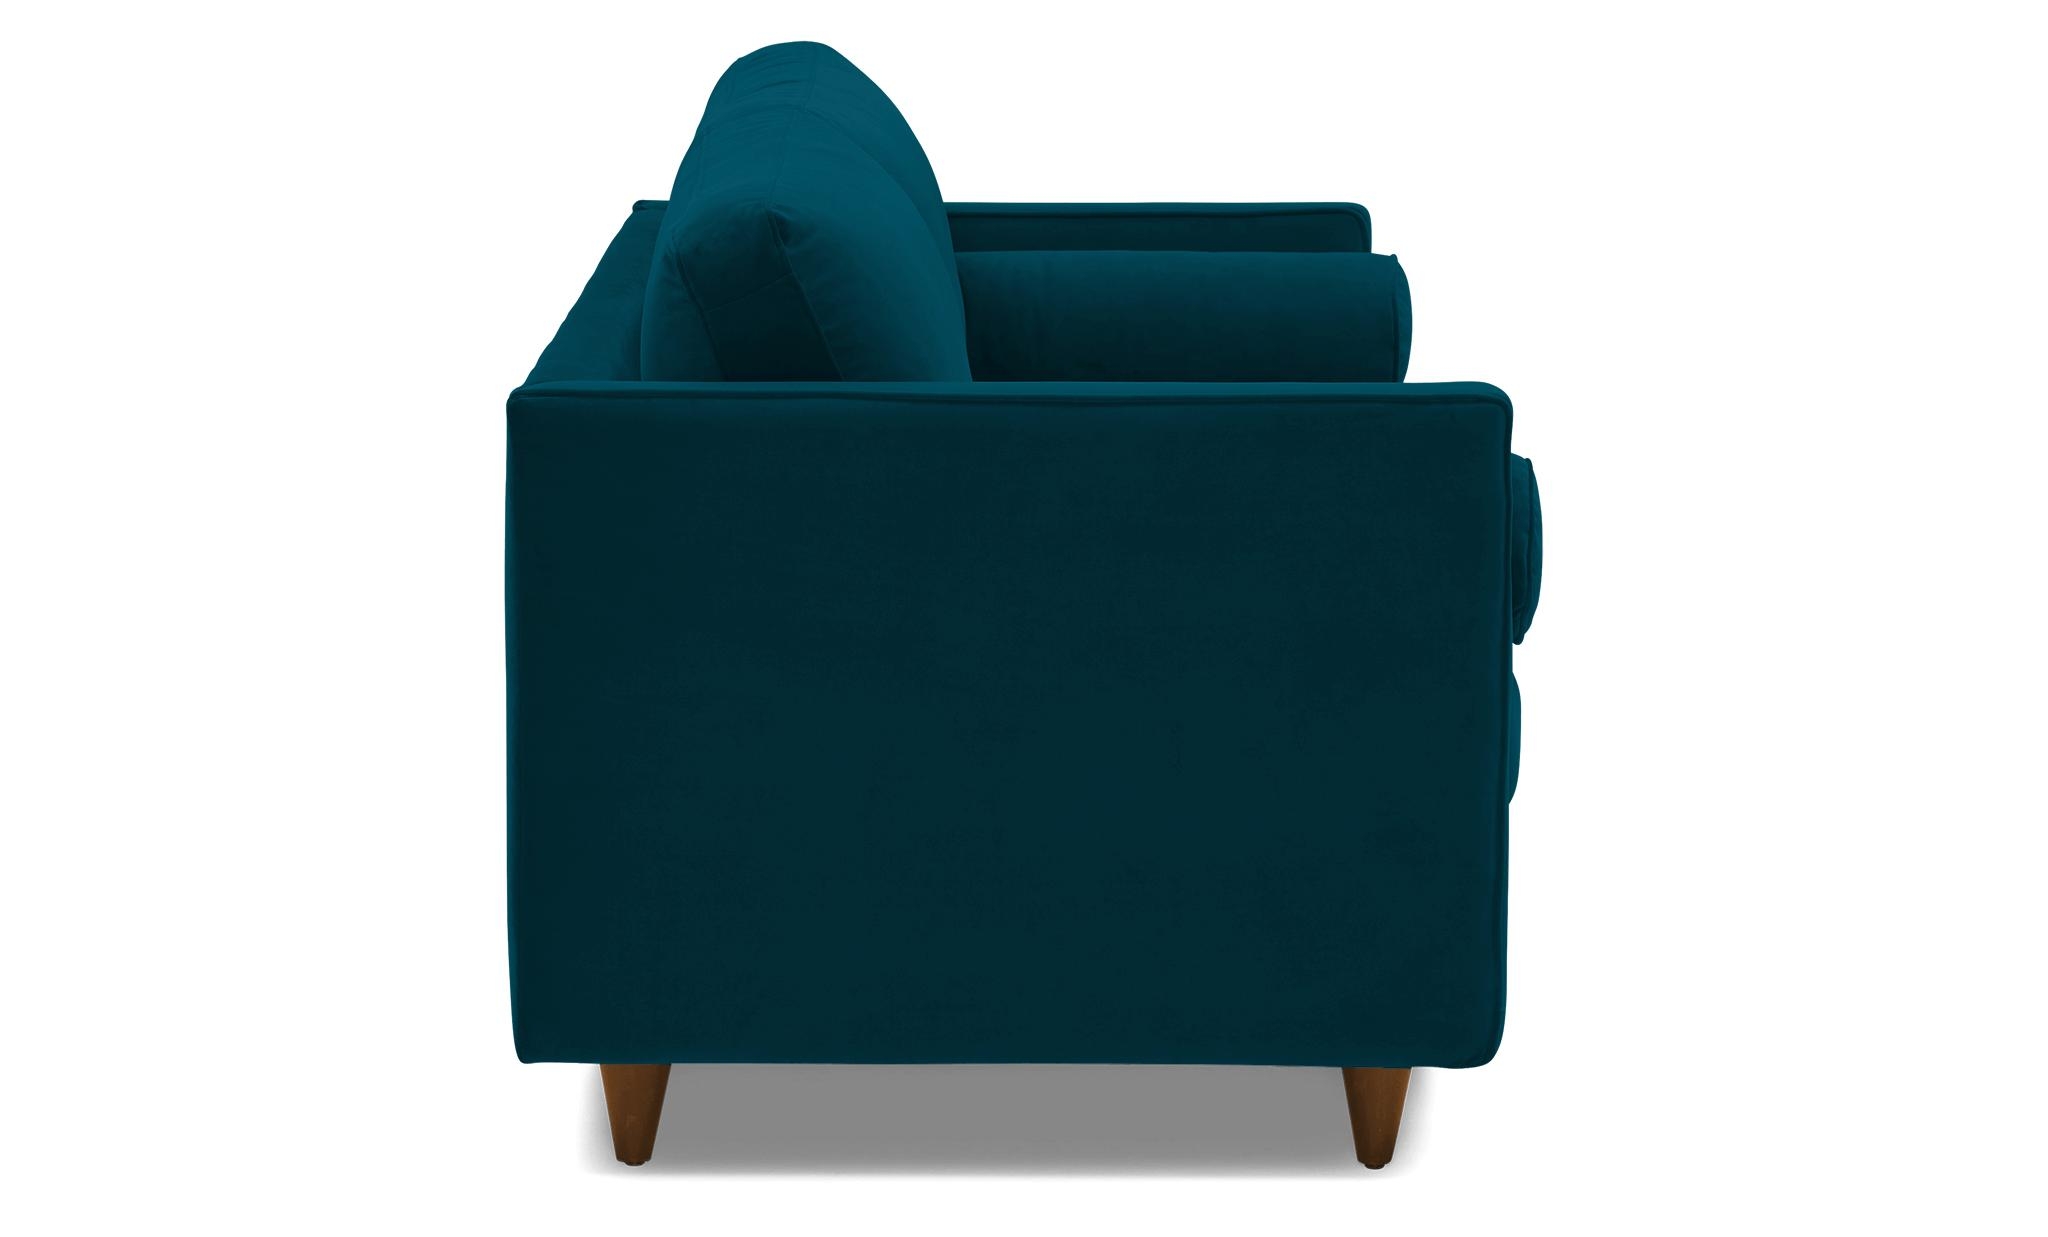 Blue Briar Mid Century Modern Sleeper Sofa - Key Largo Zenith Teal - Mocha - Image 2